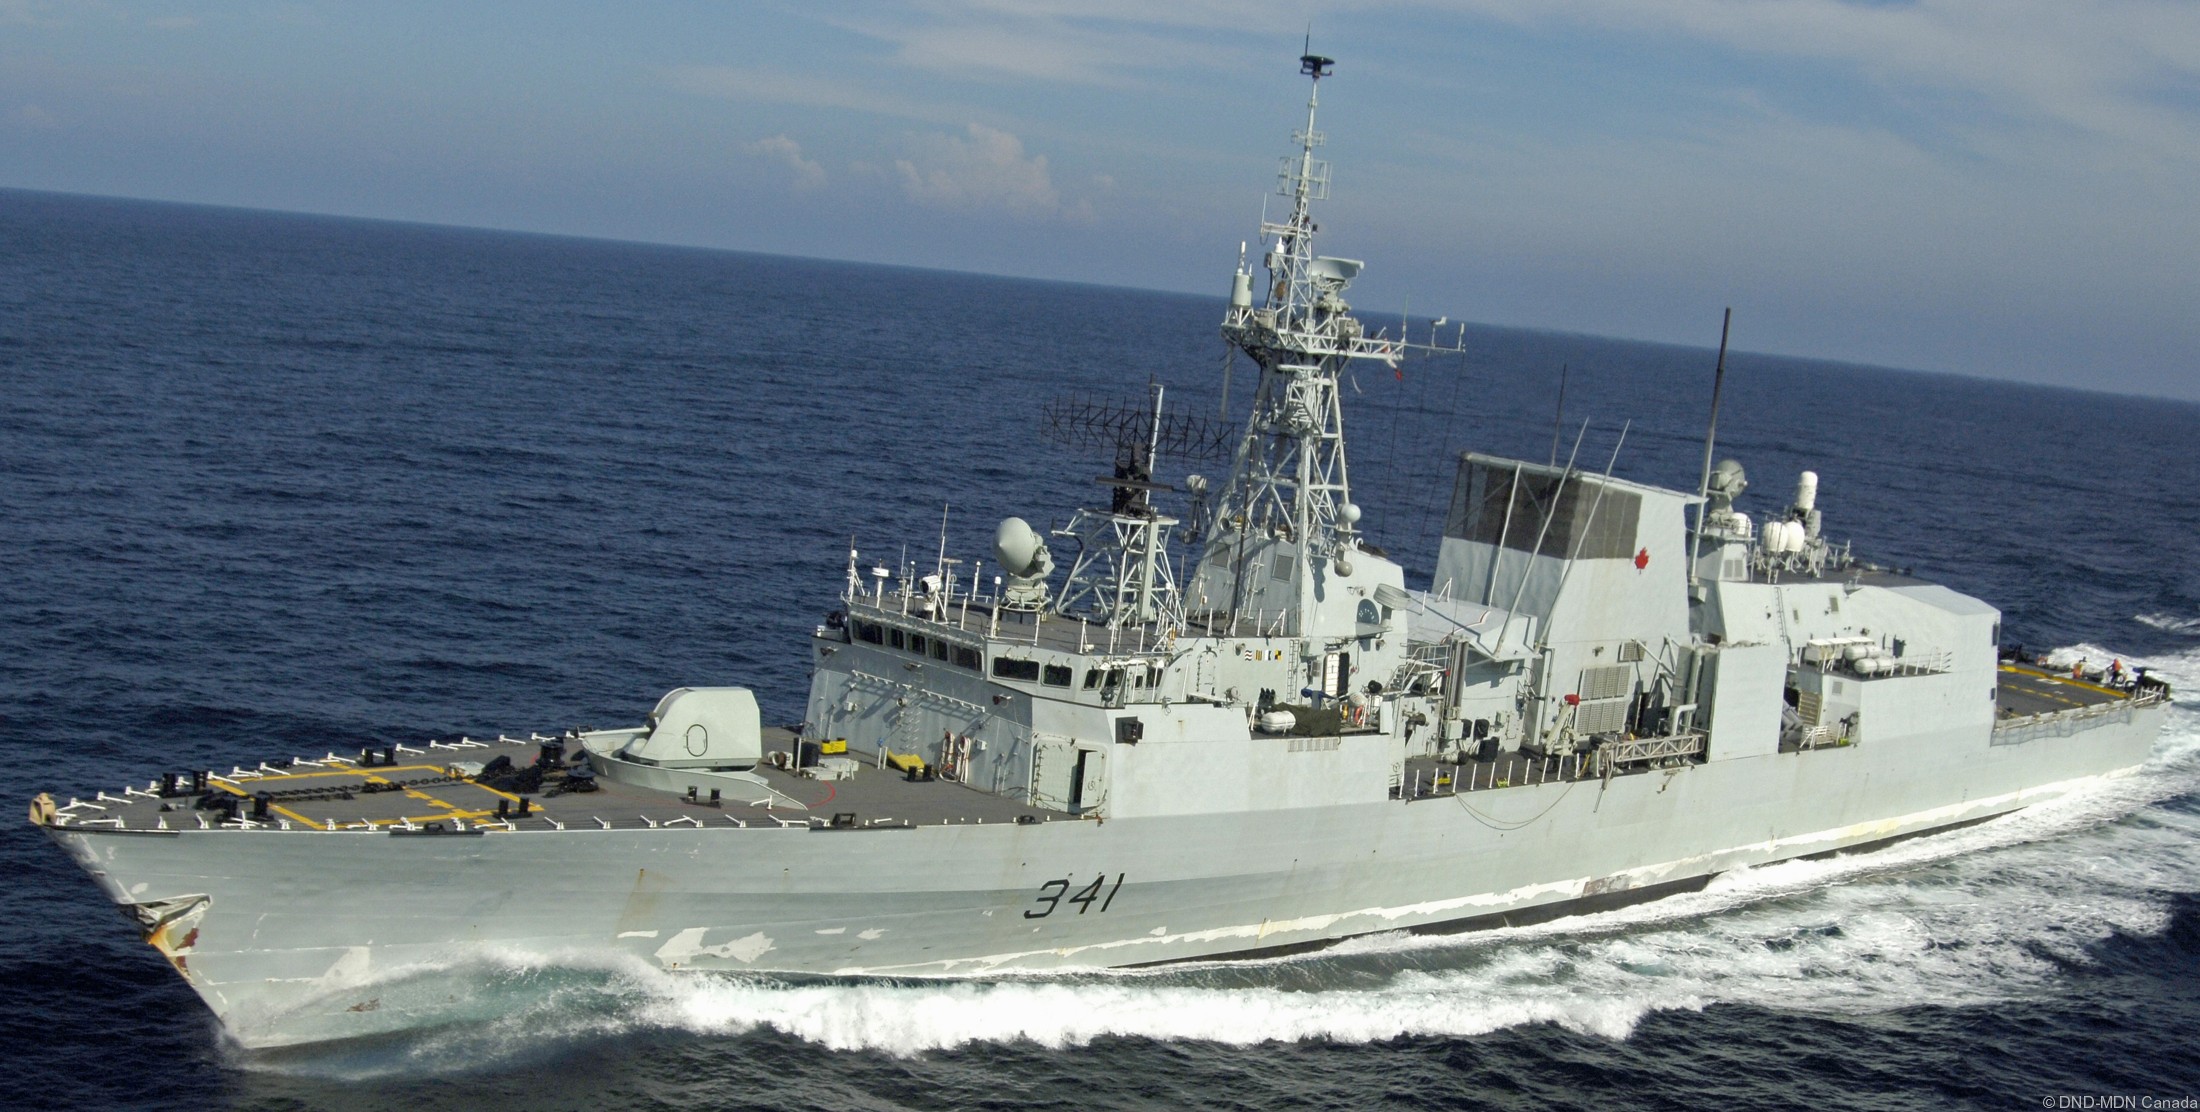 ffh-441 hmcs ottawa halifax class helicopter patrol frigate ncsm royal canadian navy 35x esquimalt cfb